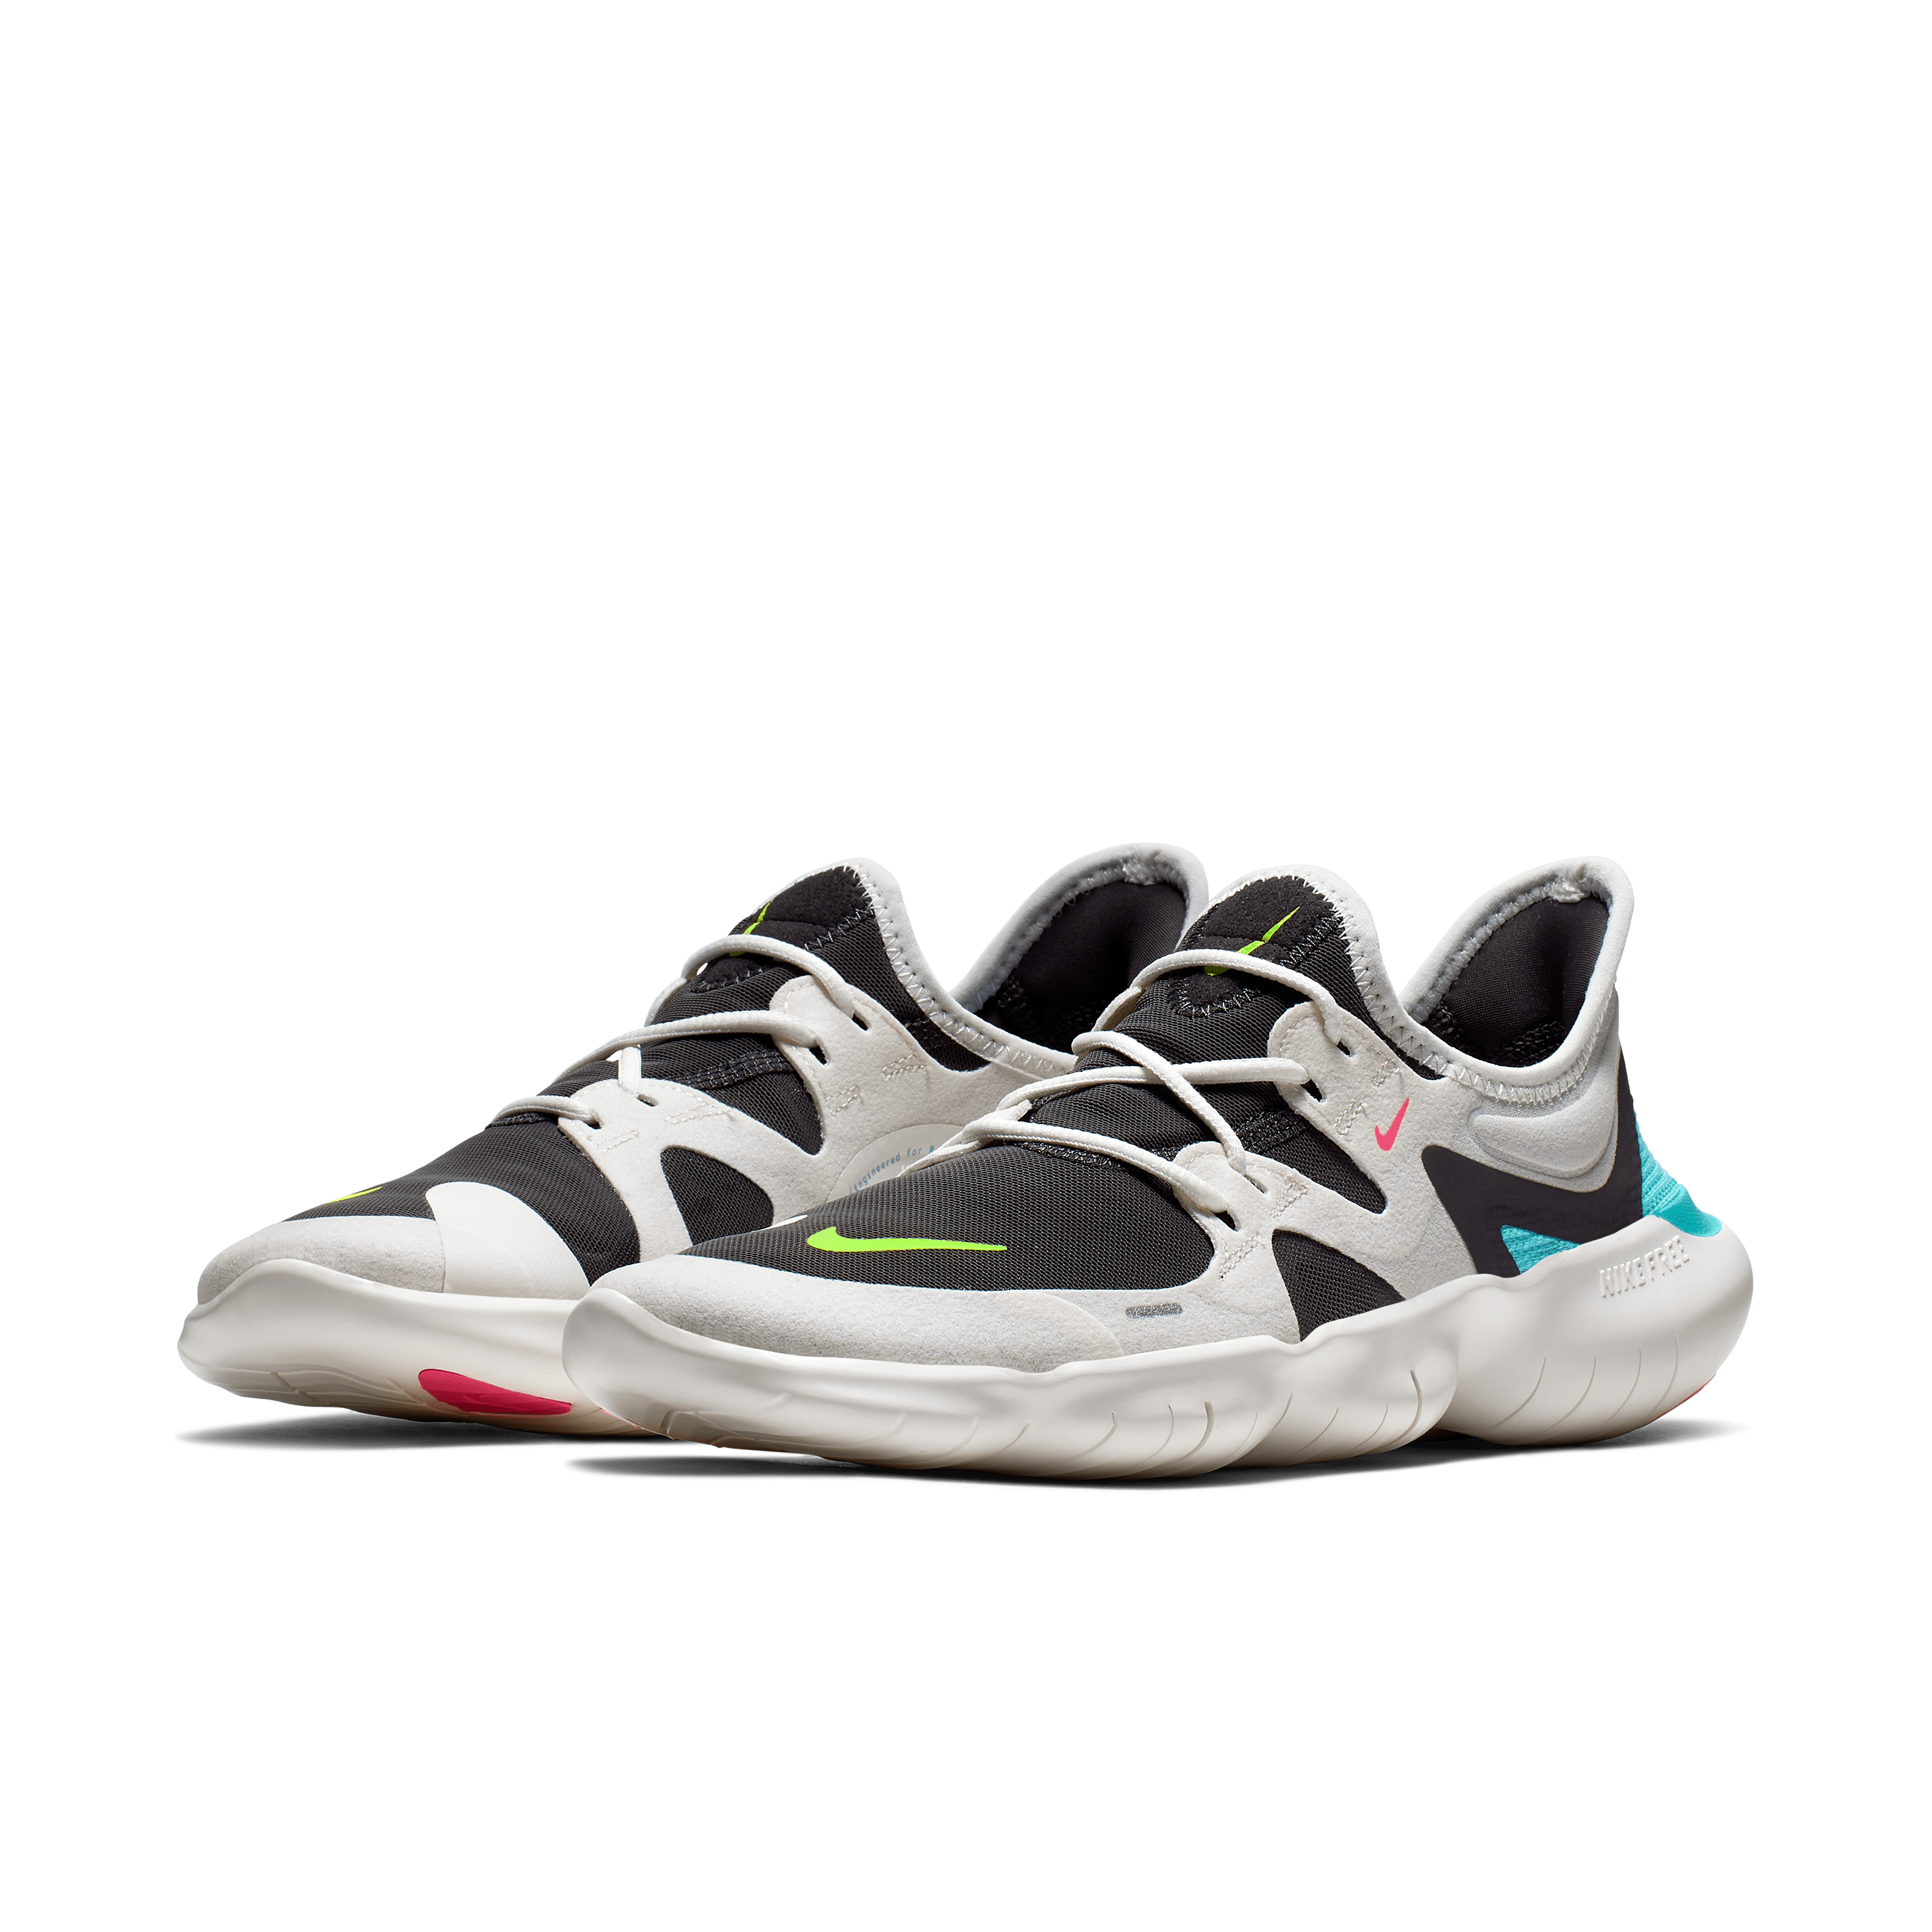 Araña de tela en embudo Flecha Infidelidad Nike Free 5.0 Running Shoe 2019 | POPSUGAR Fitness